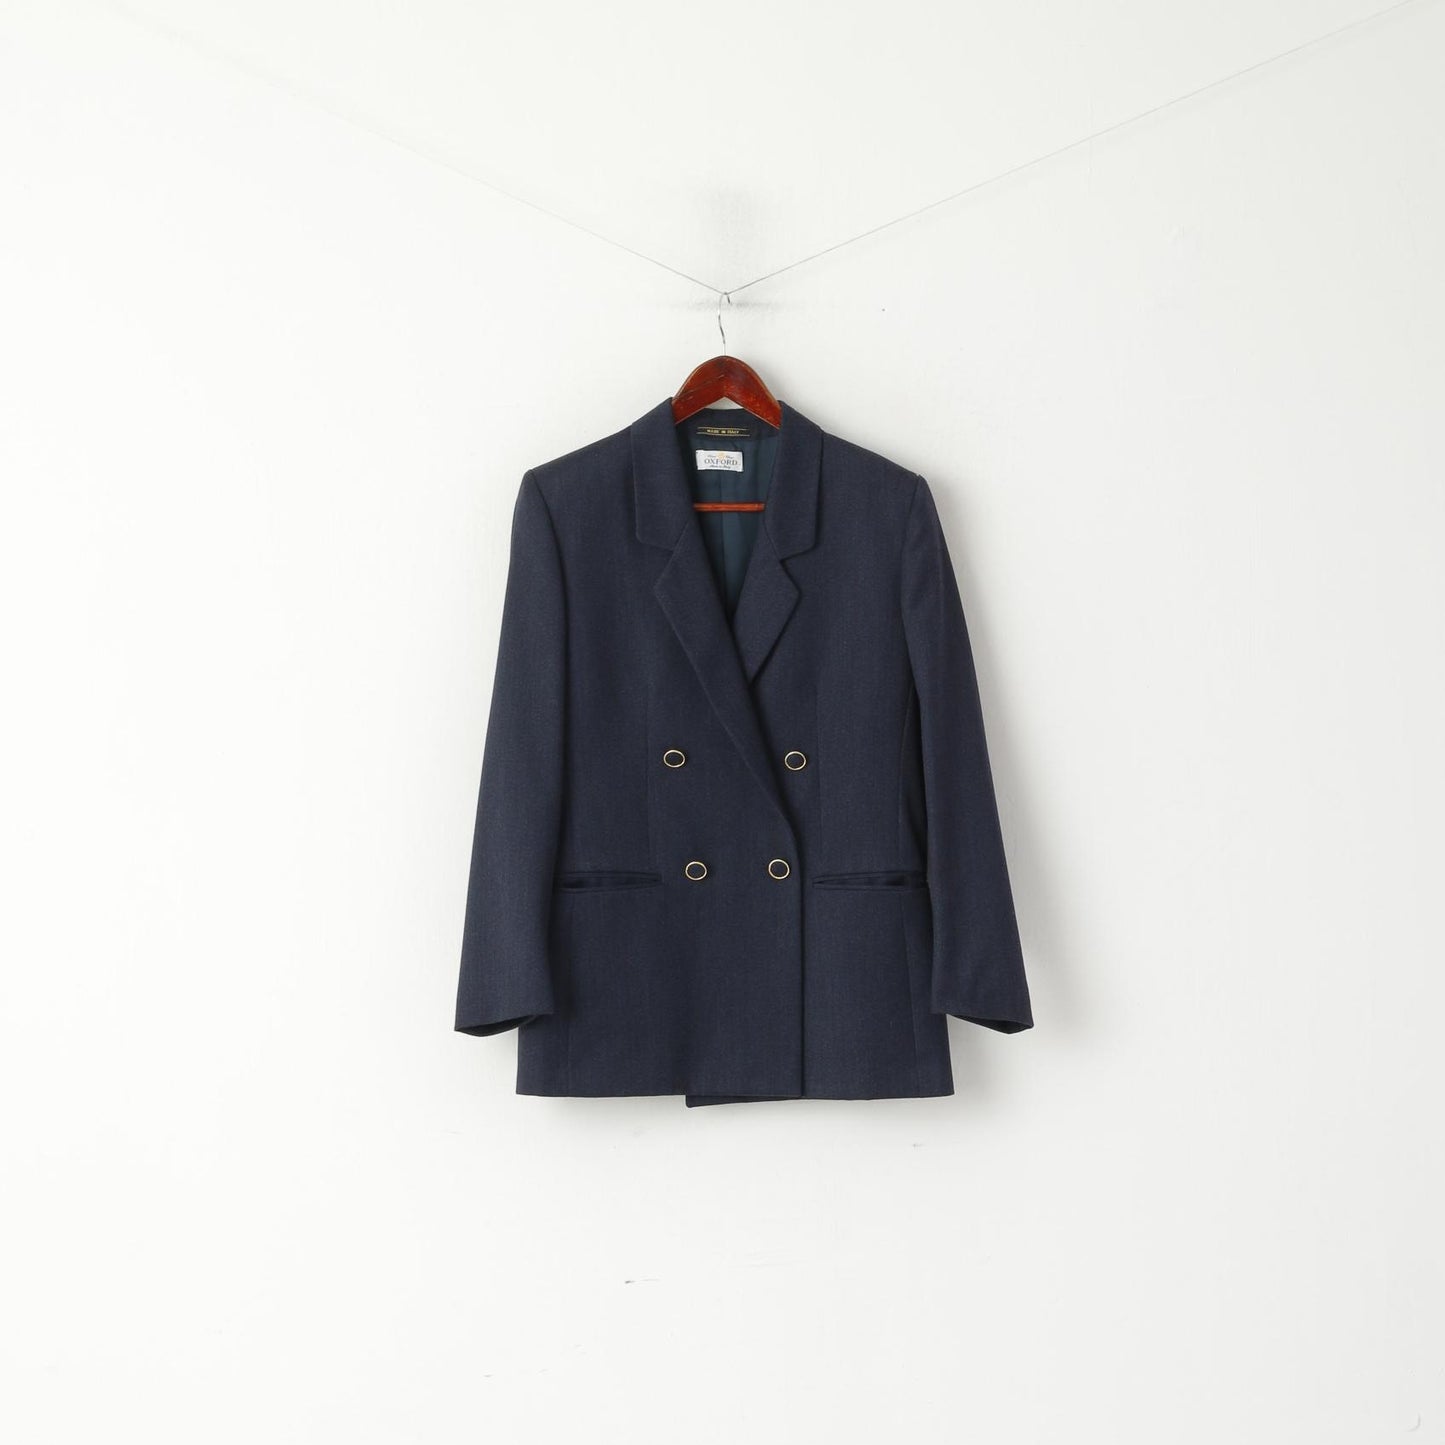 Oxford First Class Women 10 44 M Blazer Navy Gold Buttons Wool Italy Classic Jacket